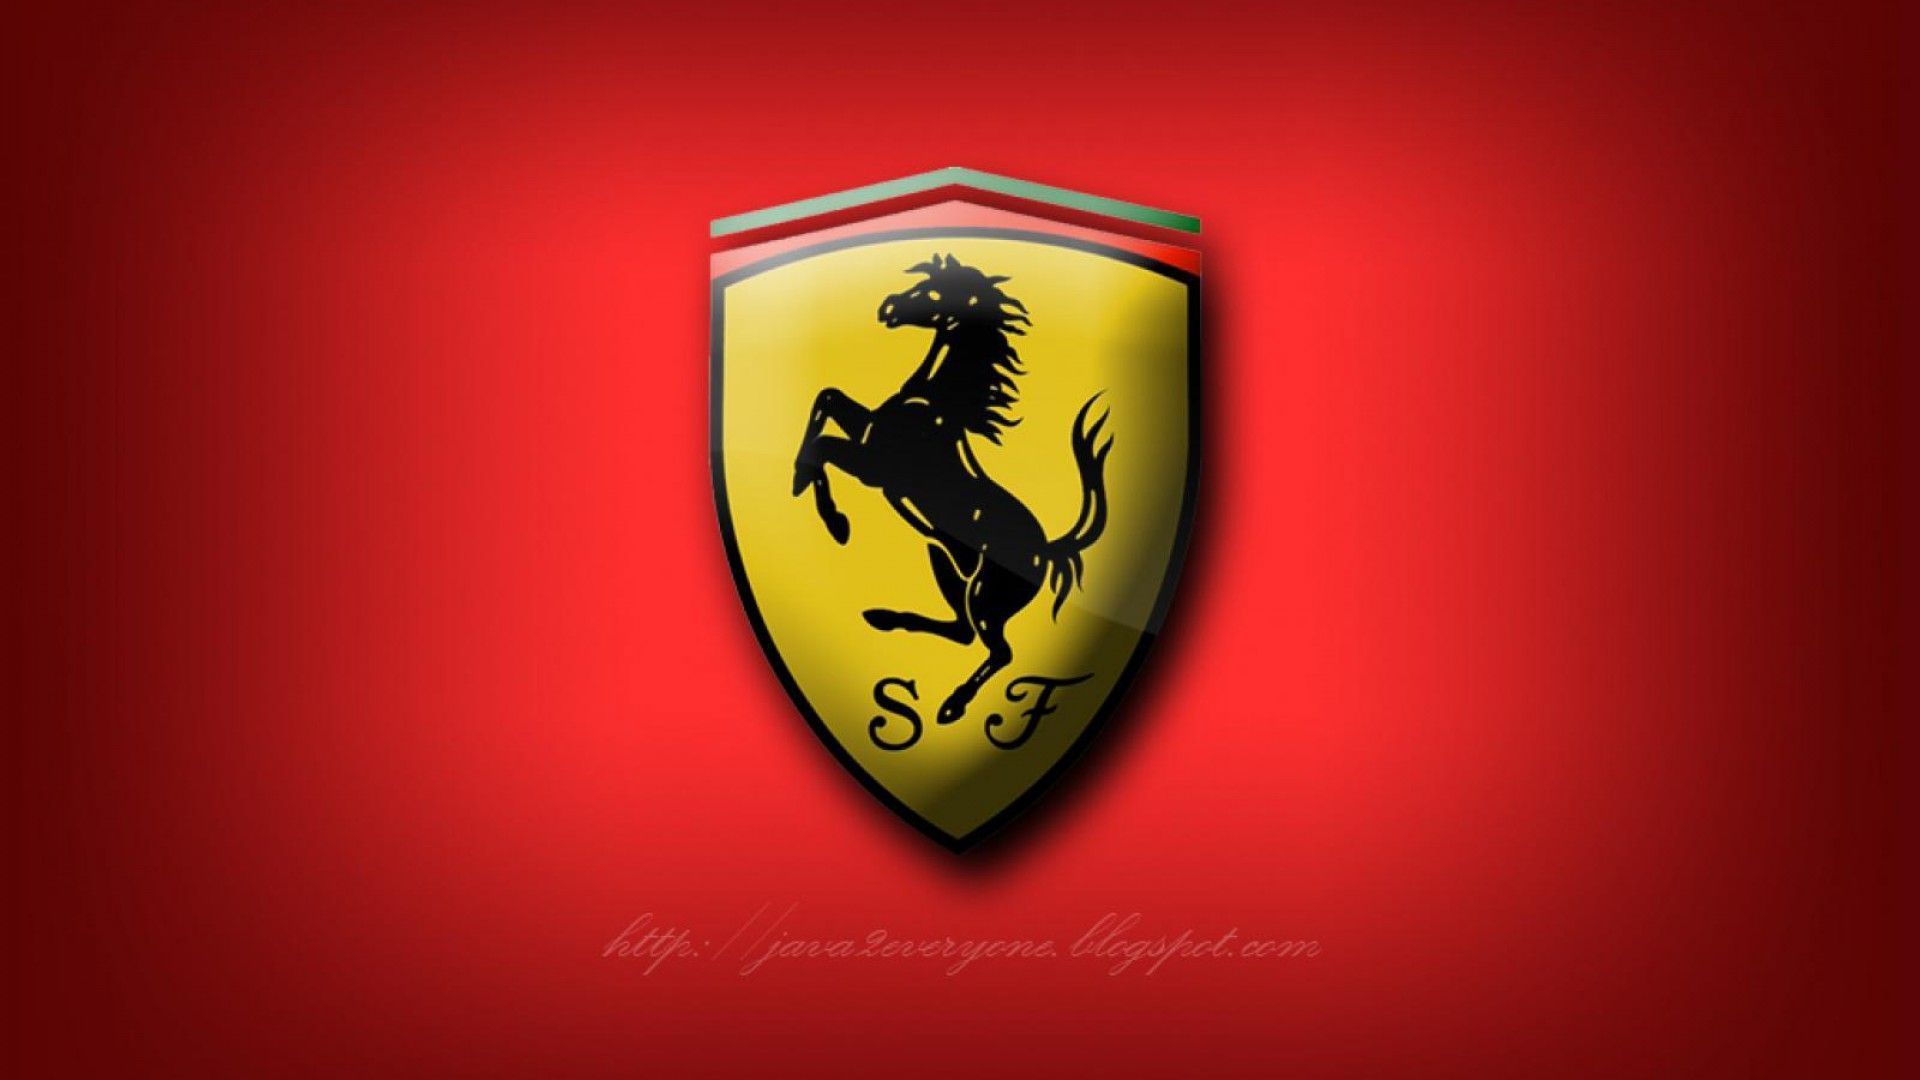 Ferrari Logo Wallpaper Hd 1080p - image #246